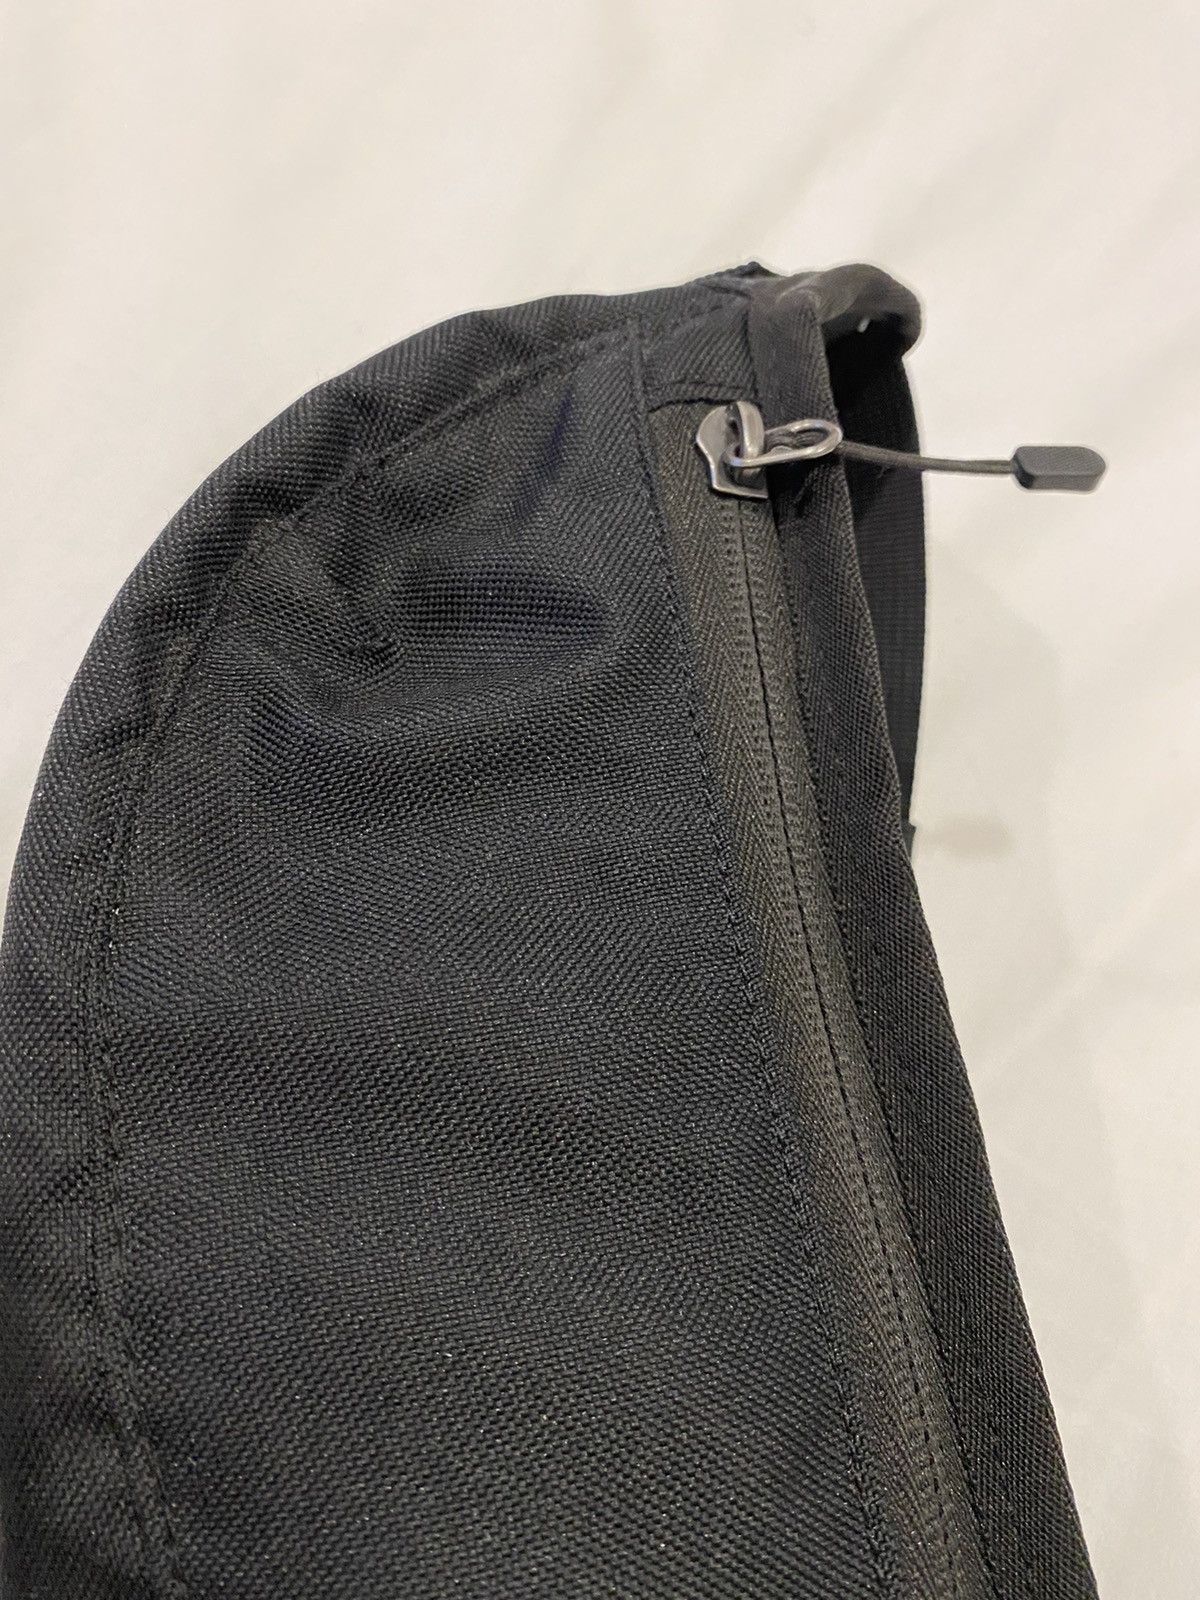 Authentic Nike Waist Pouch Bag - 7